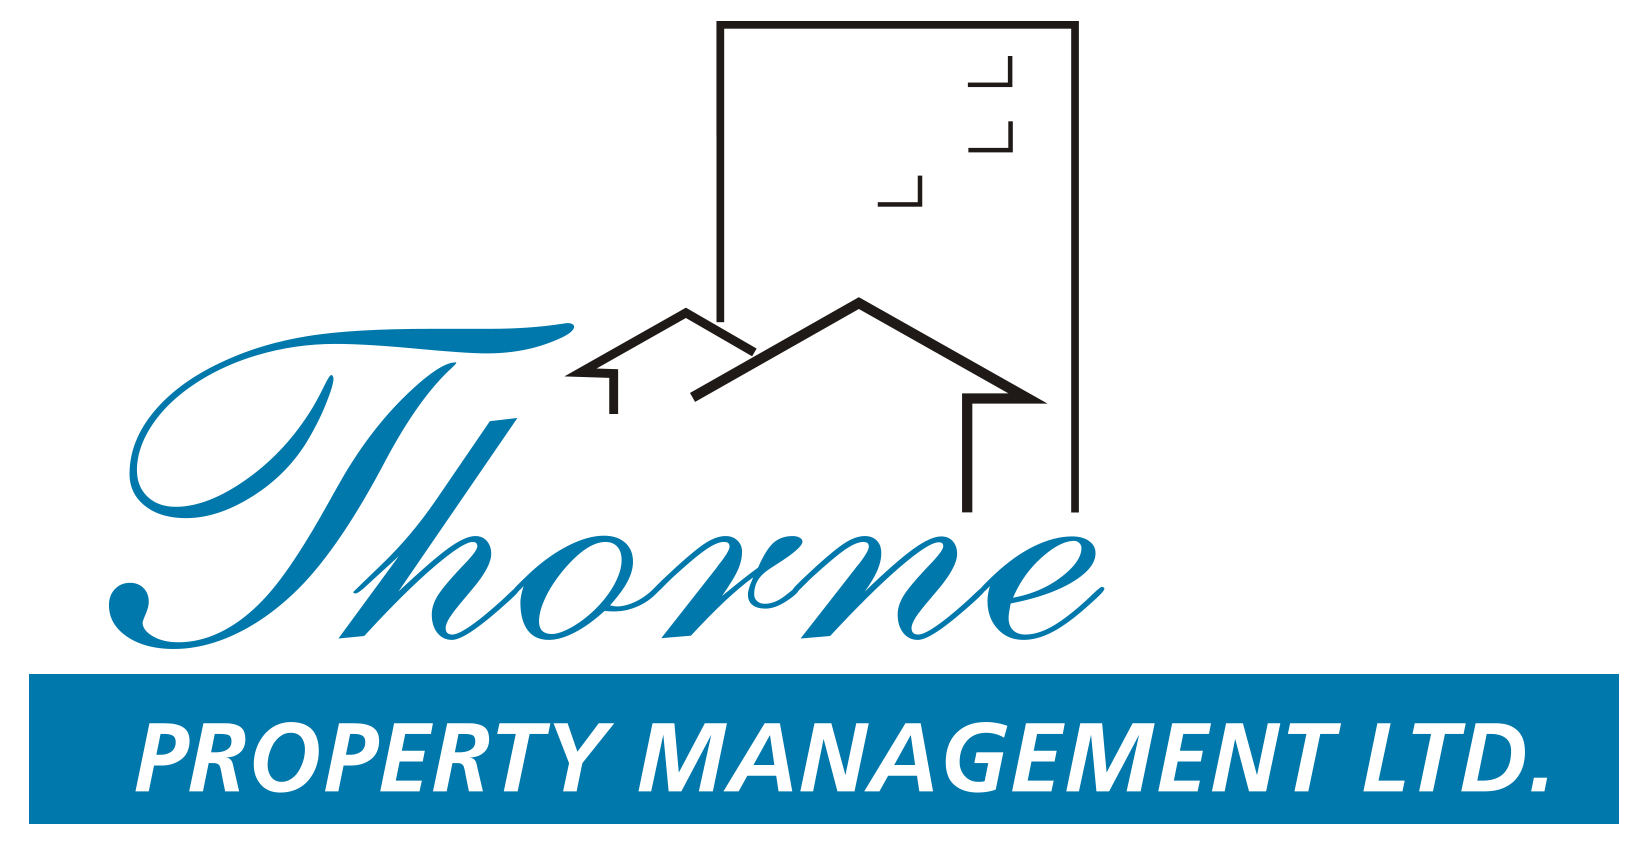 Thorne Property Management LTD. - Professional Property Management